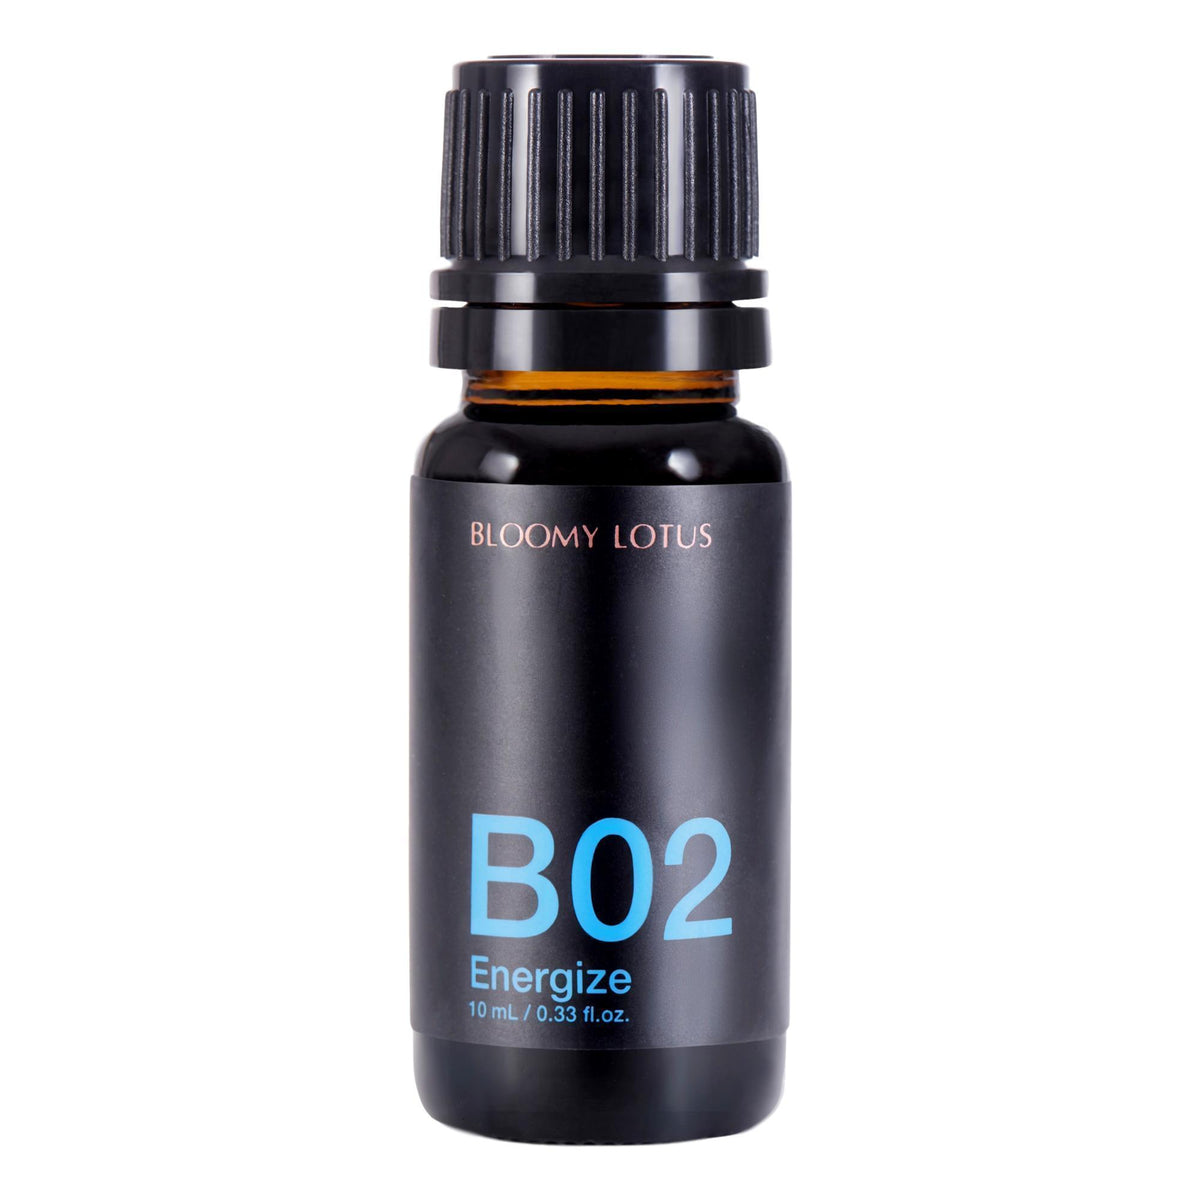 Bloomy Lotus B02 Energize Essential Oil, 10 ml